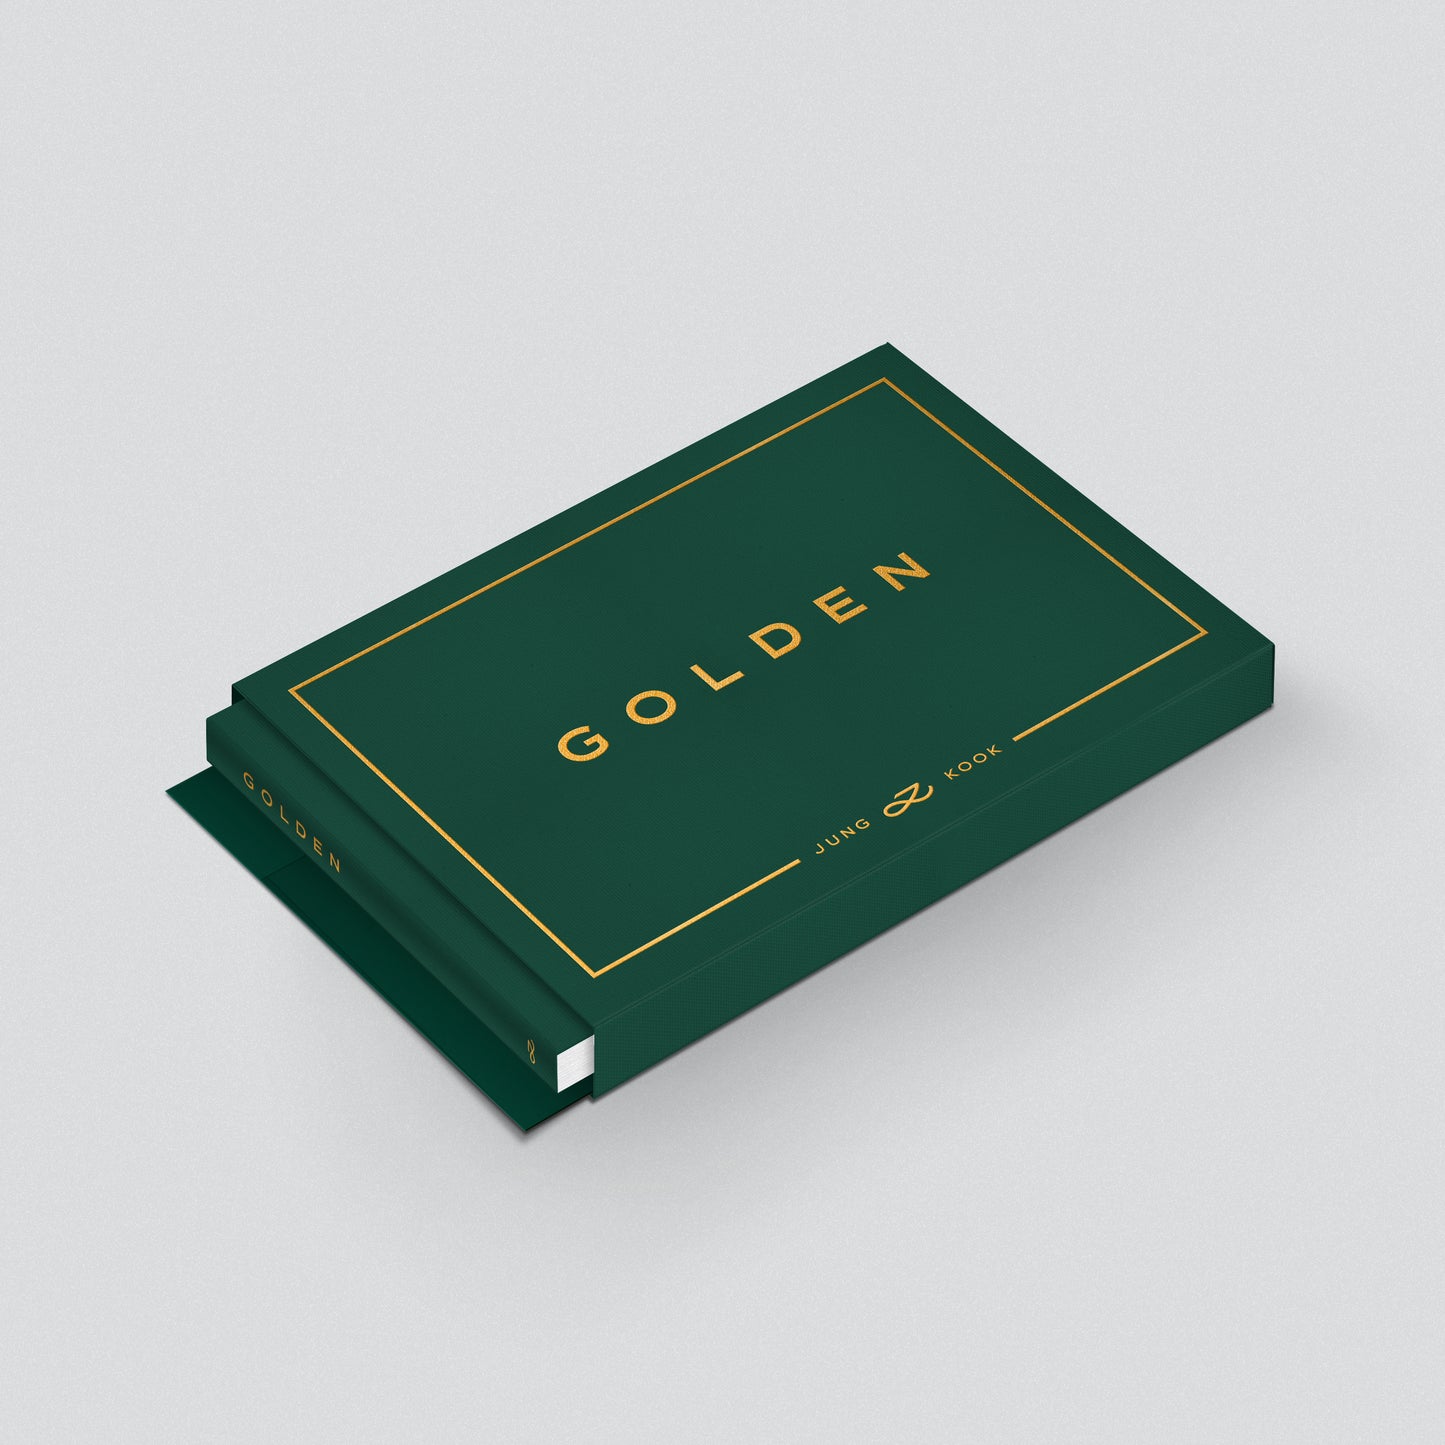 BTS Jung Kook 'GOLDEN' (Set + Weverse Albums ver.) + Weverse Gift